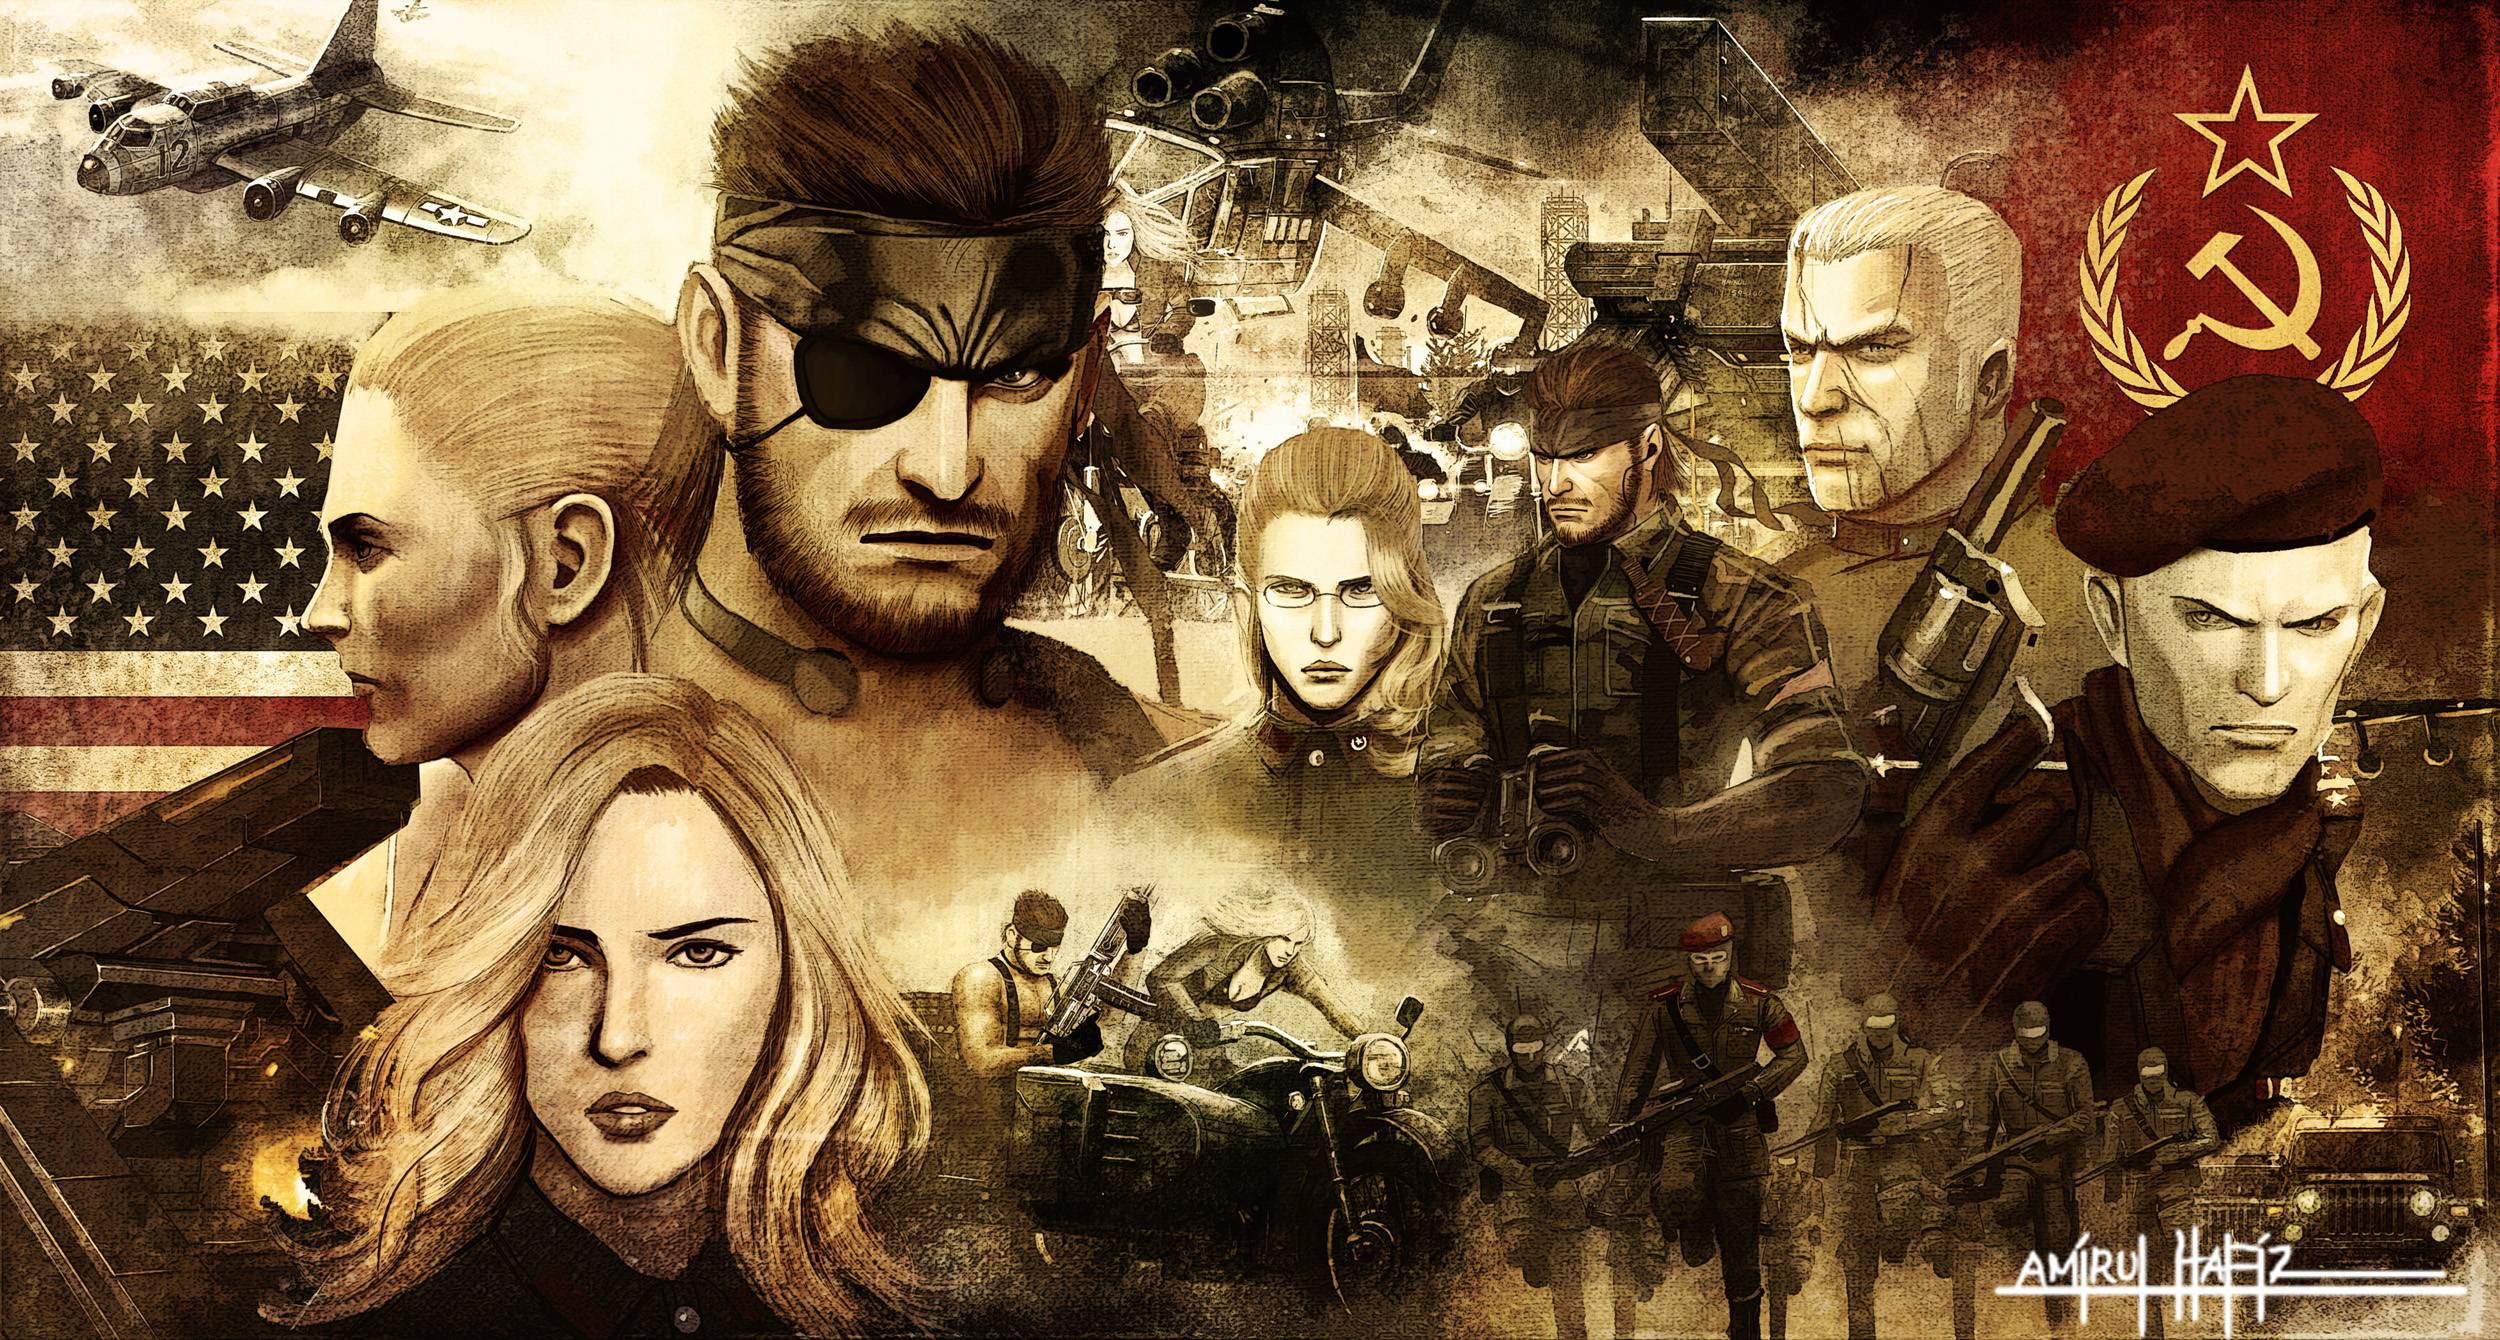 Metal Gear Solid 3 Wallpapers Wallpaper Cave